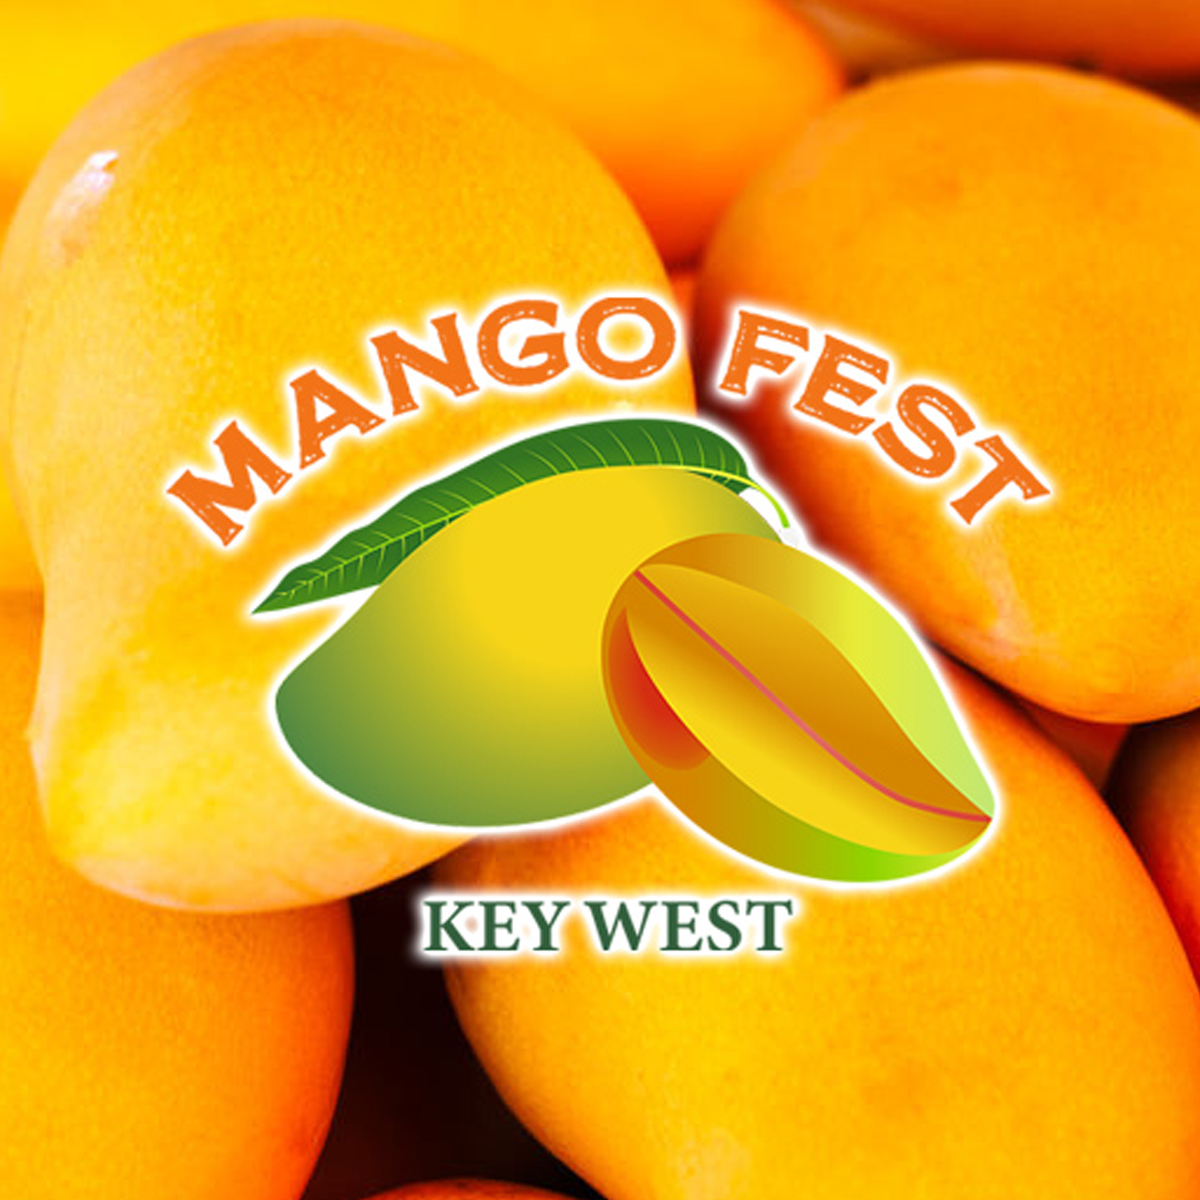 Key West Mango Fest